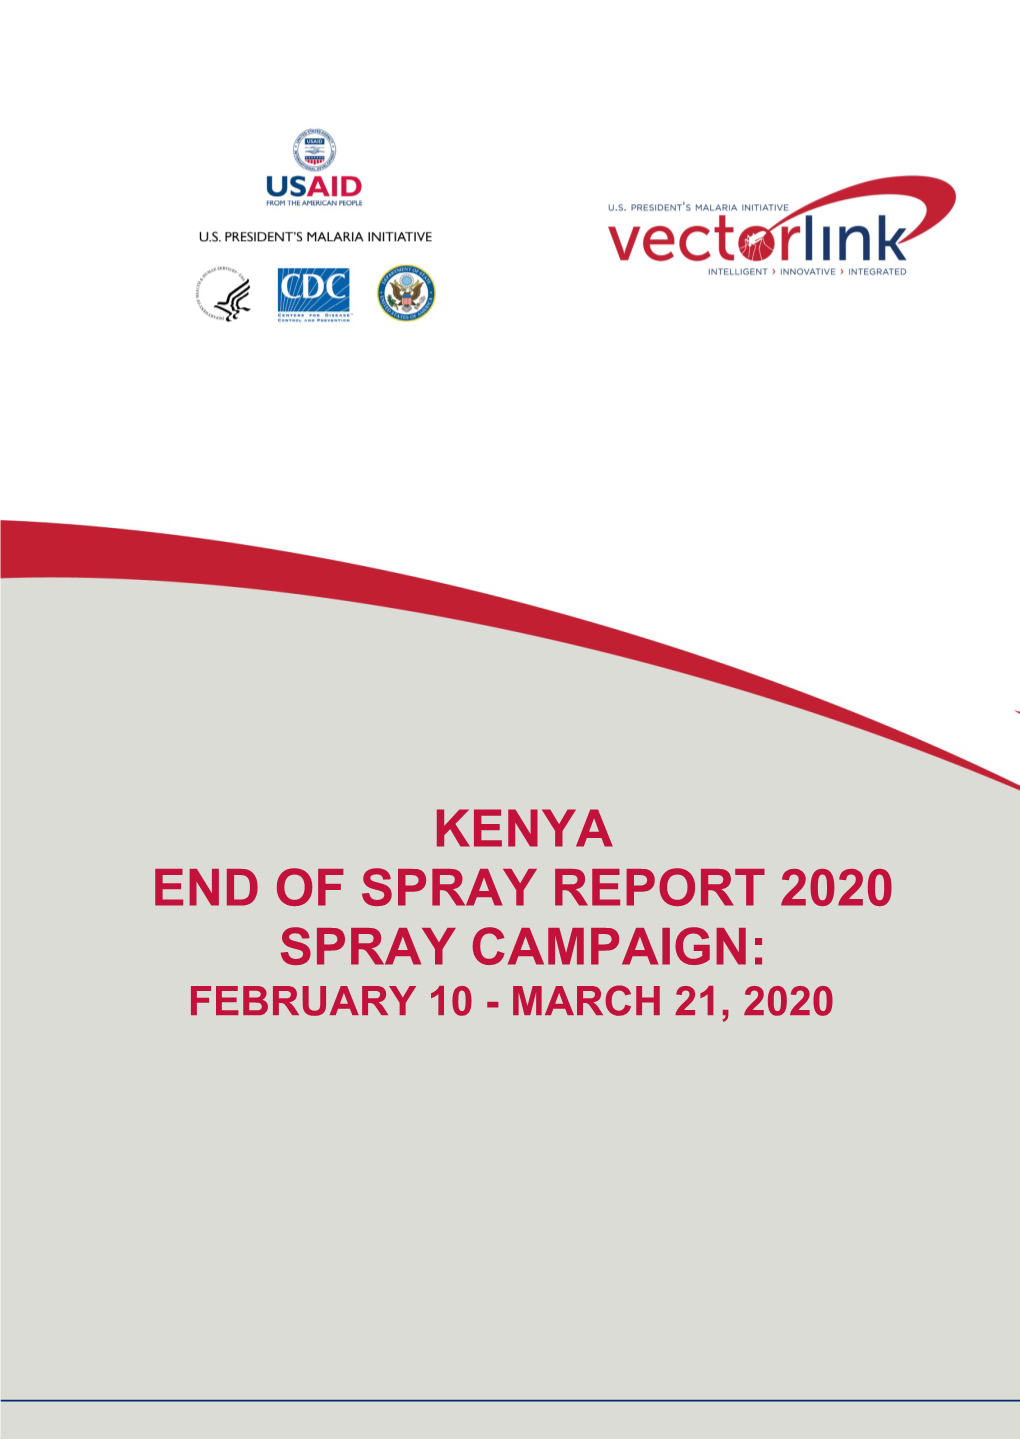 The PMI Vectorlink Kenya End of Spray Report 2020